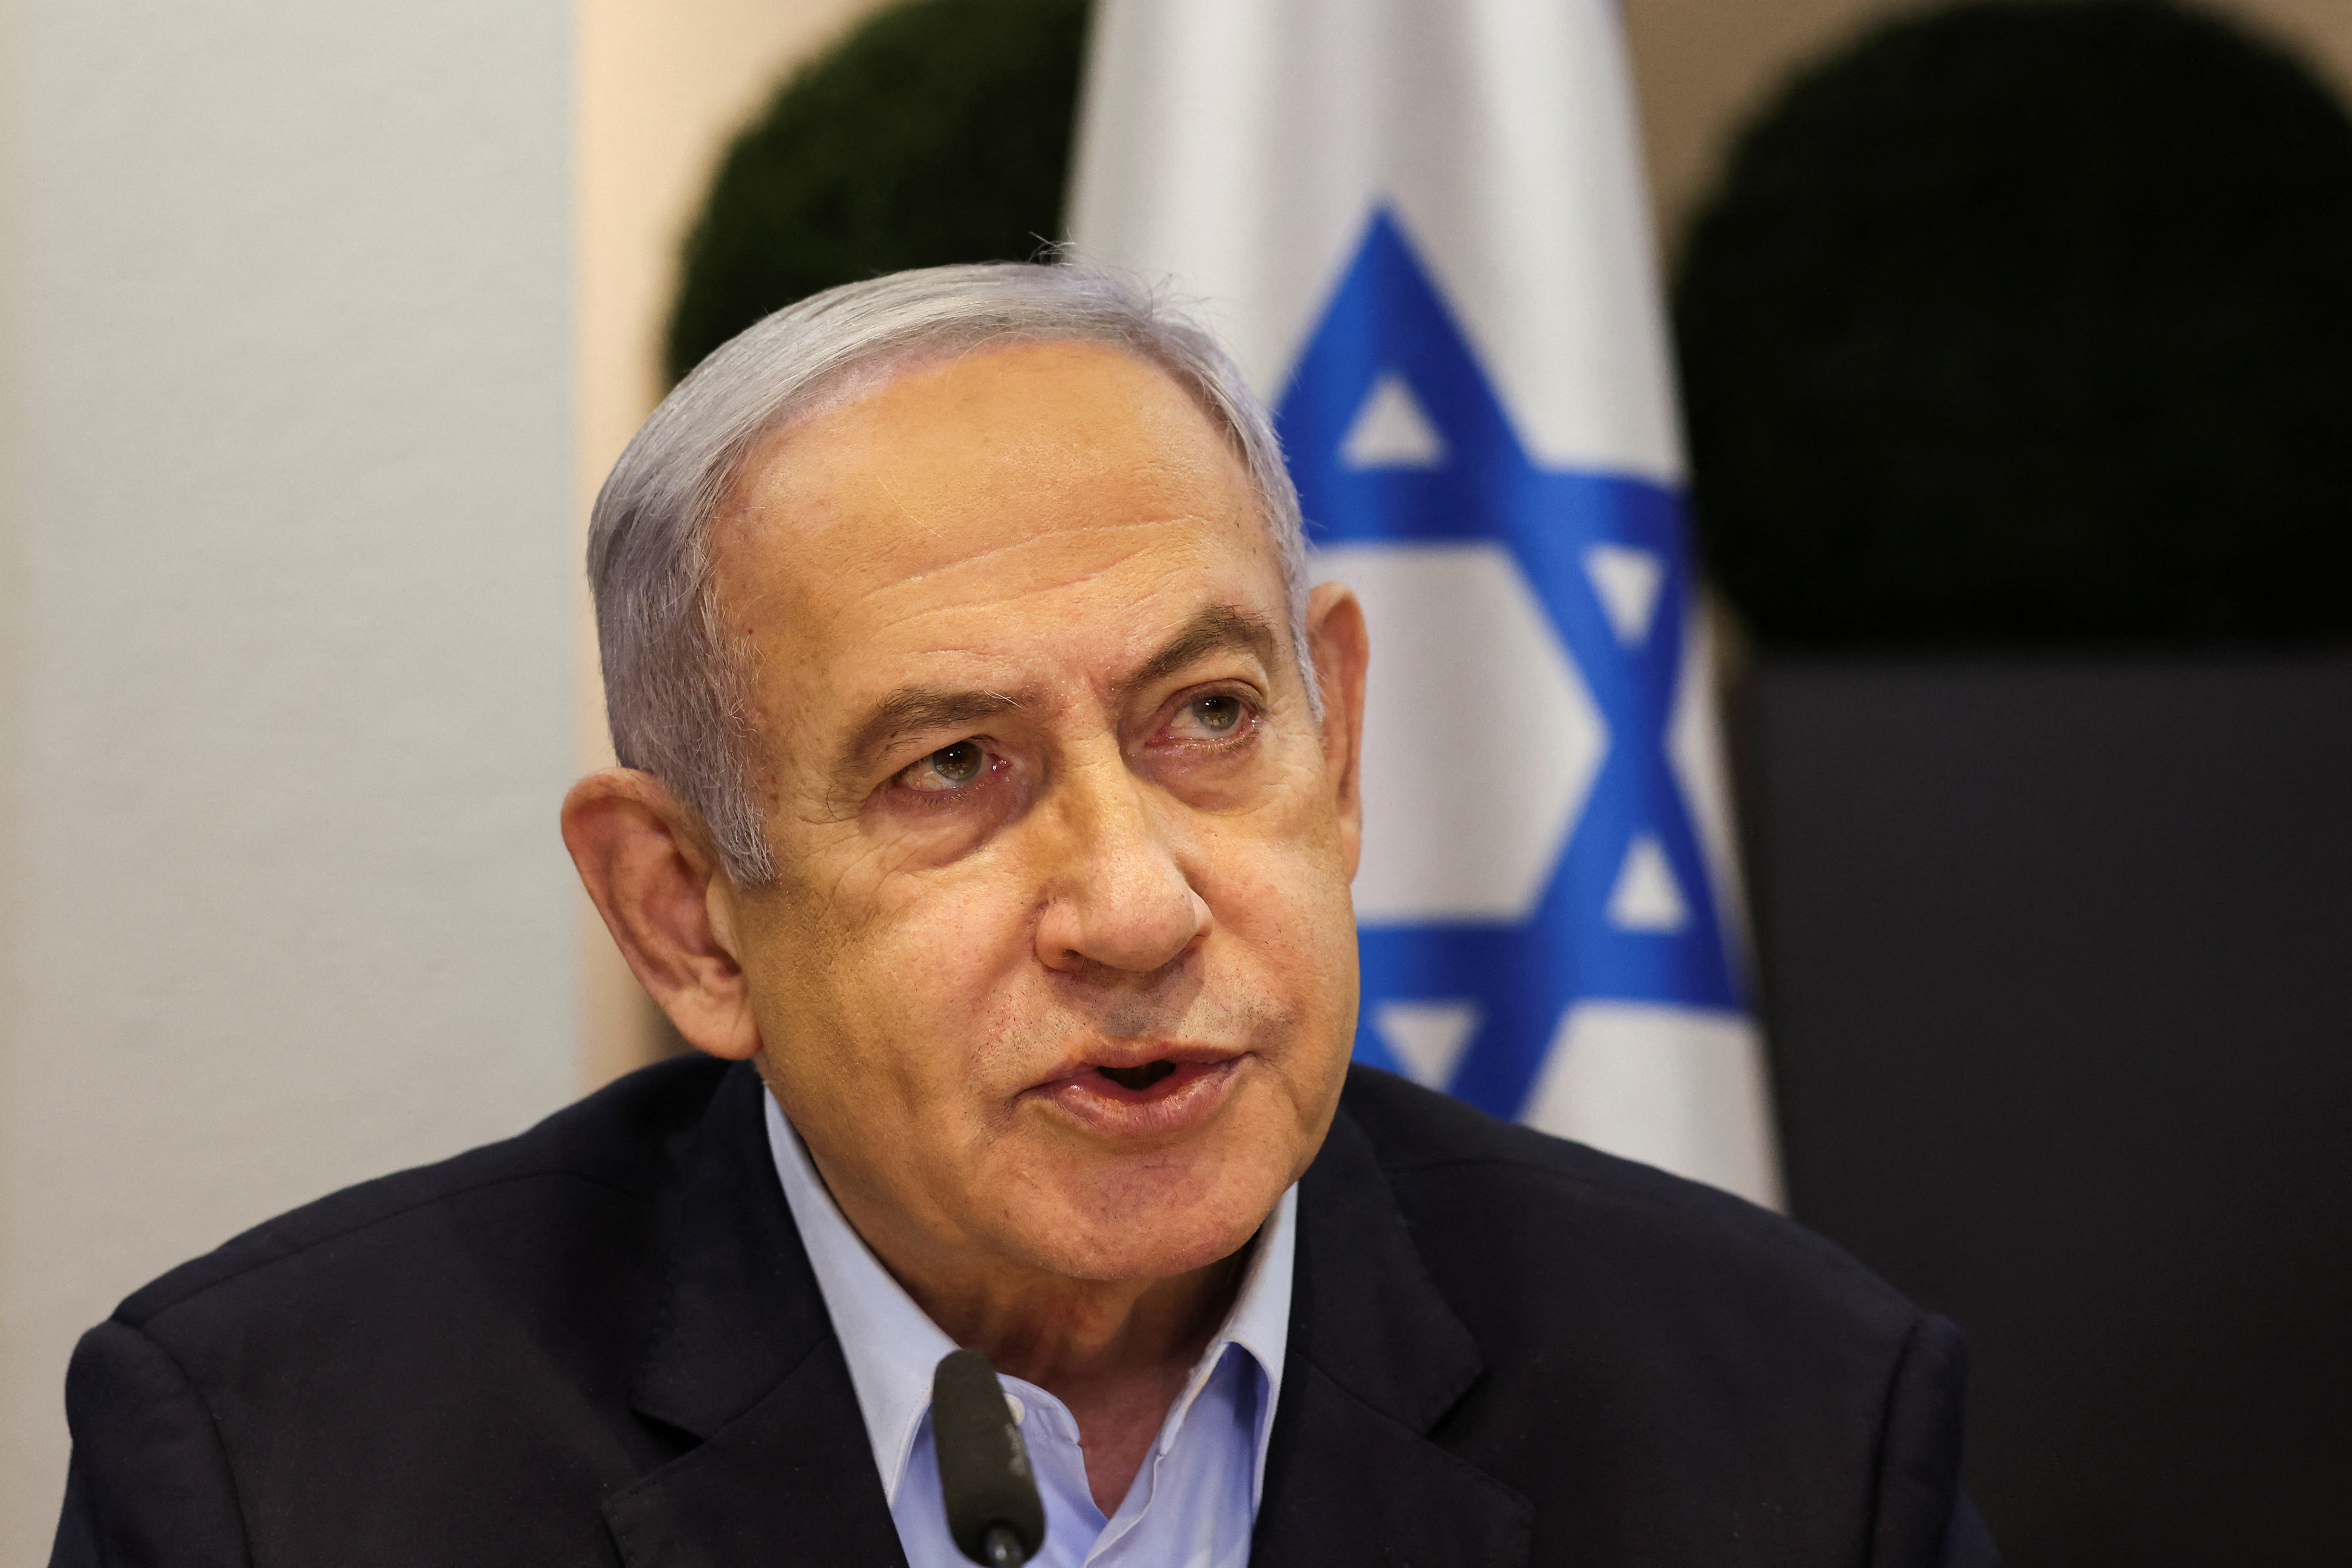 Israeli Prime Minister Benjamin Netanyahu attends a weekly cabinet meeting in Tel Aviv, Israel, on January 7.